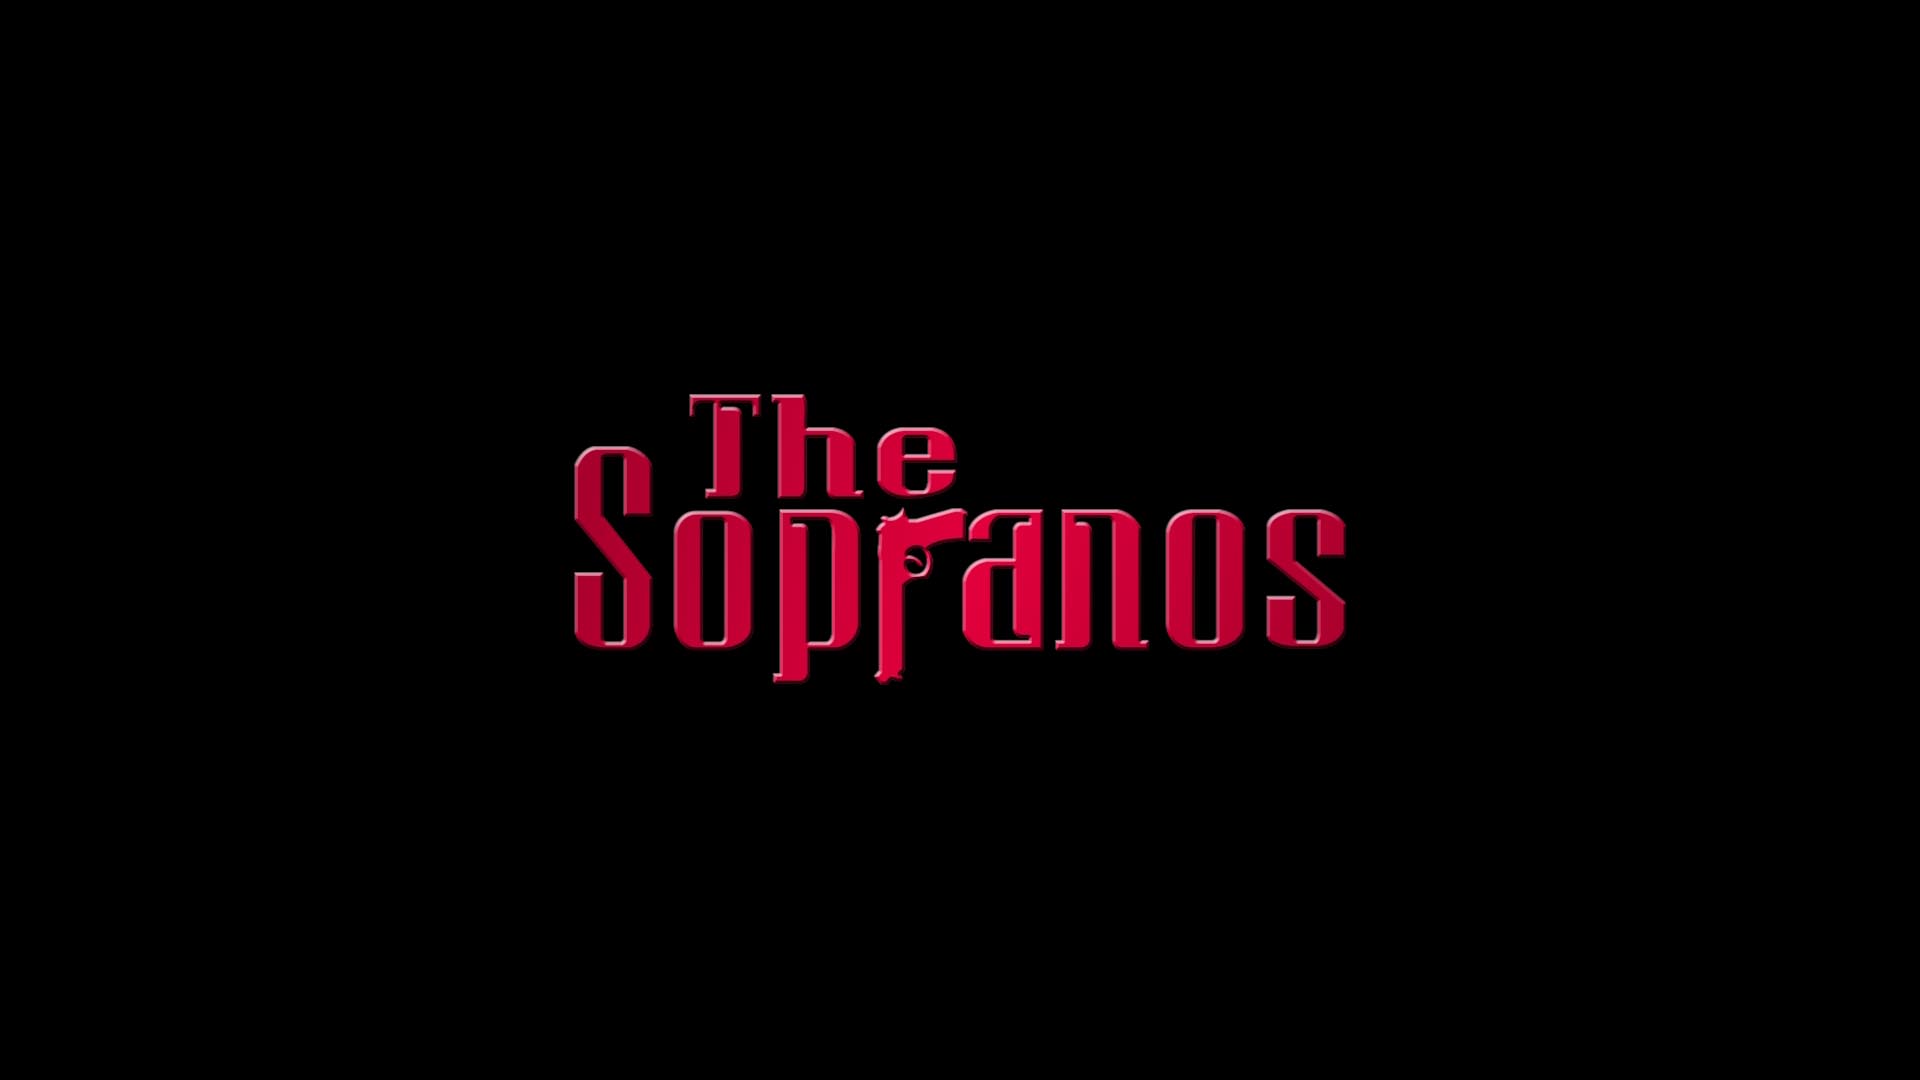 The Sopranos HD Wallpaper For Desktop